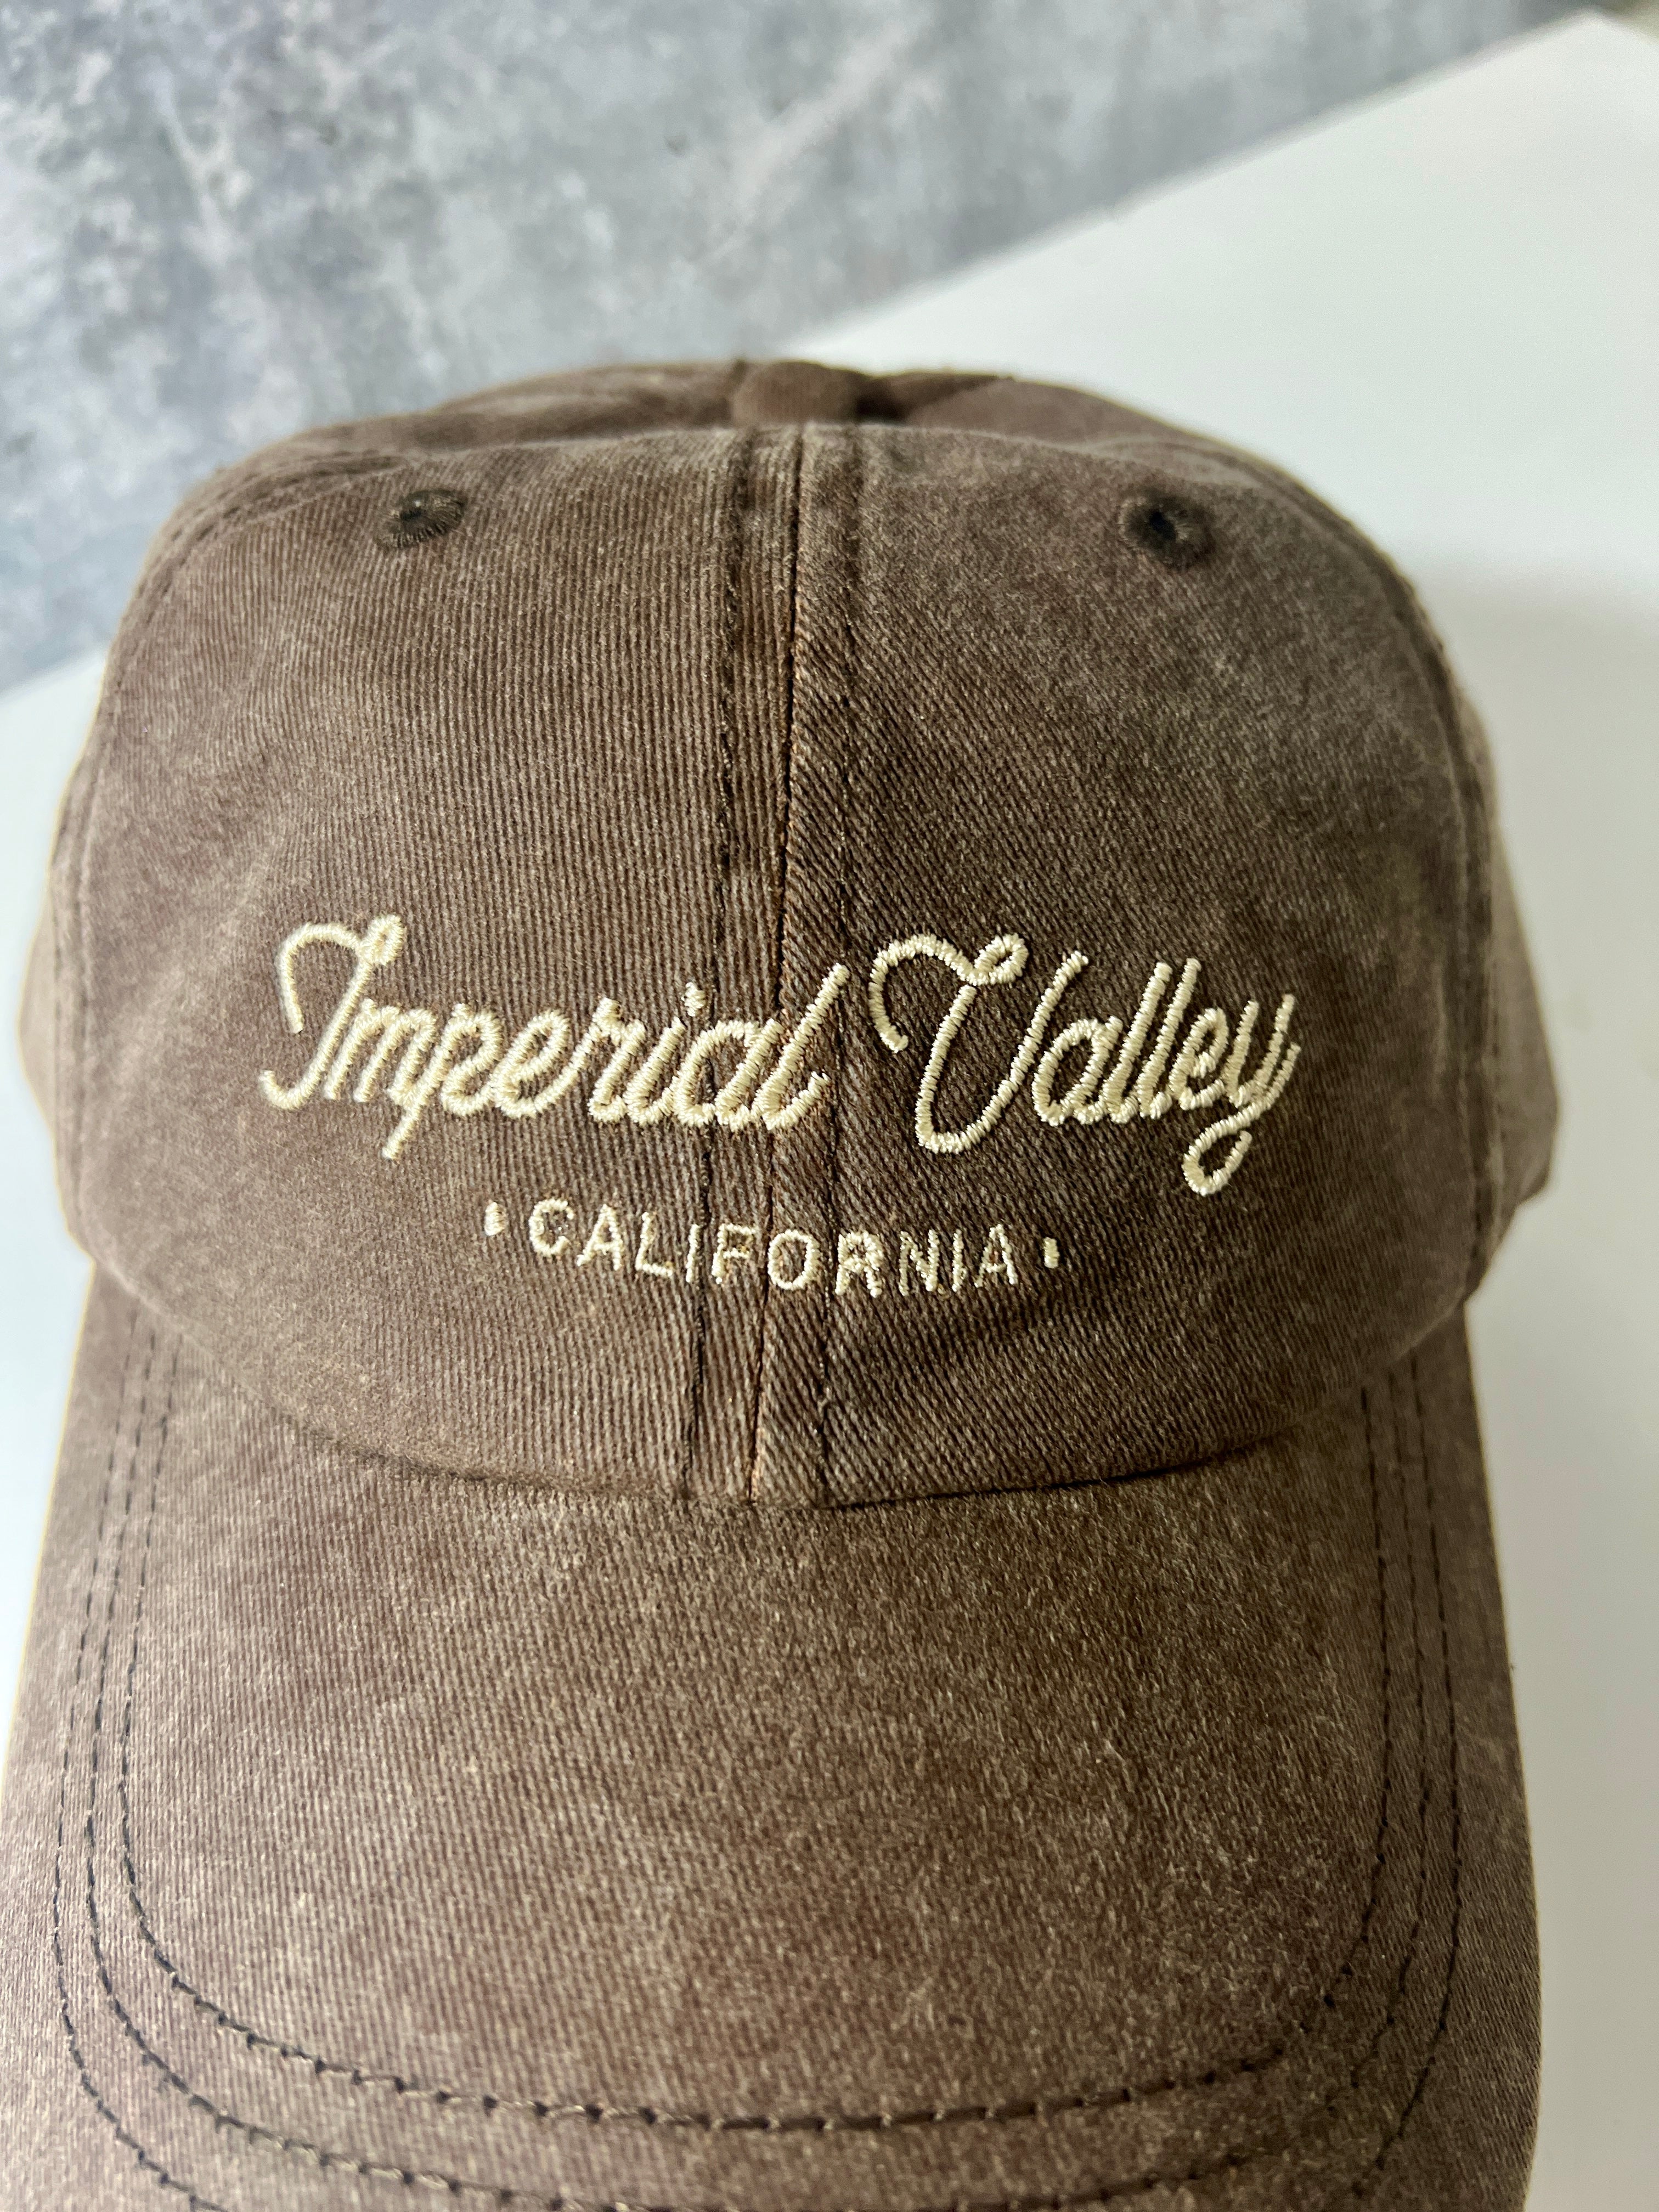 Imperial Valley Baseball Cap